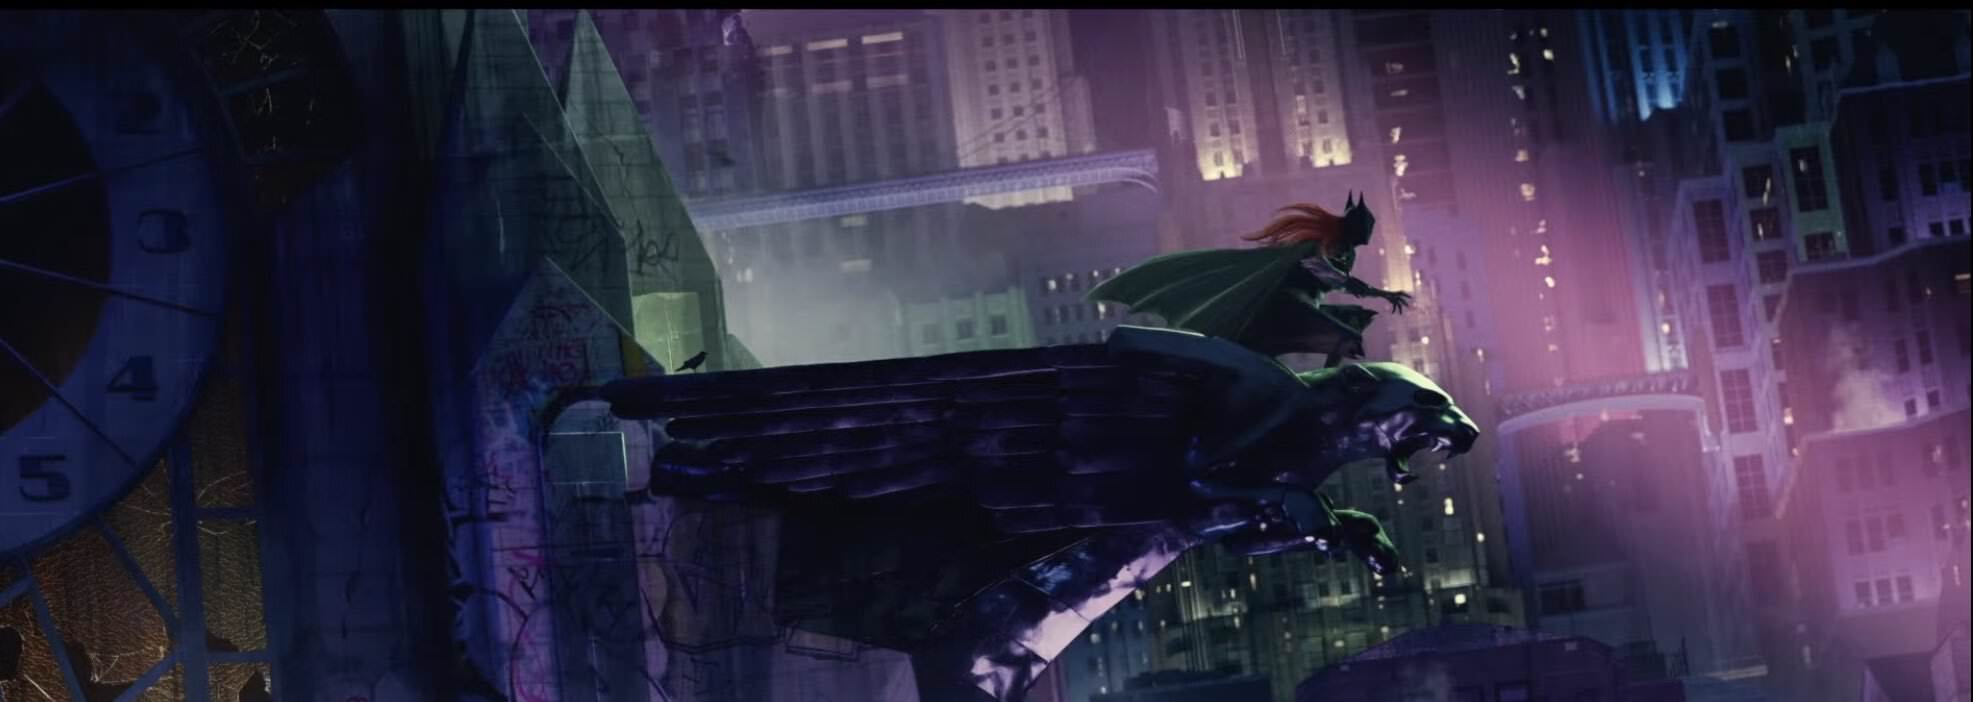 اولین تصویر مفهومی فیلم Batgirl